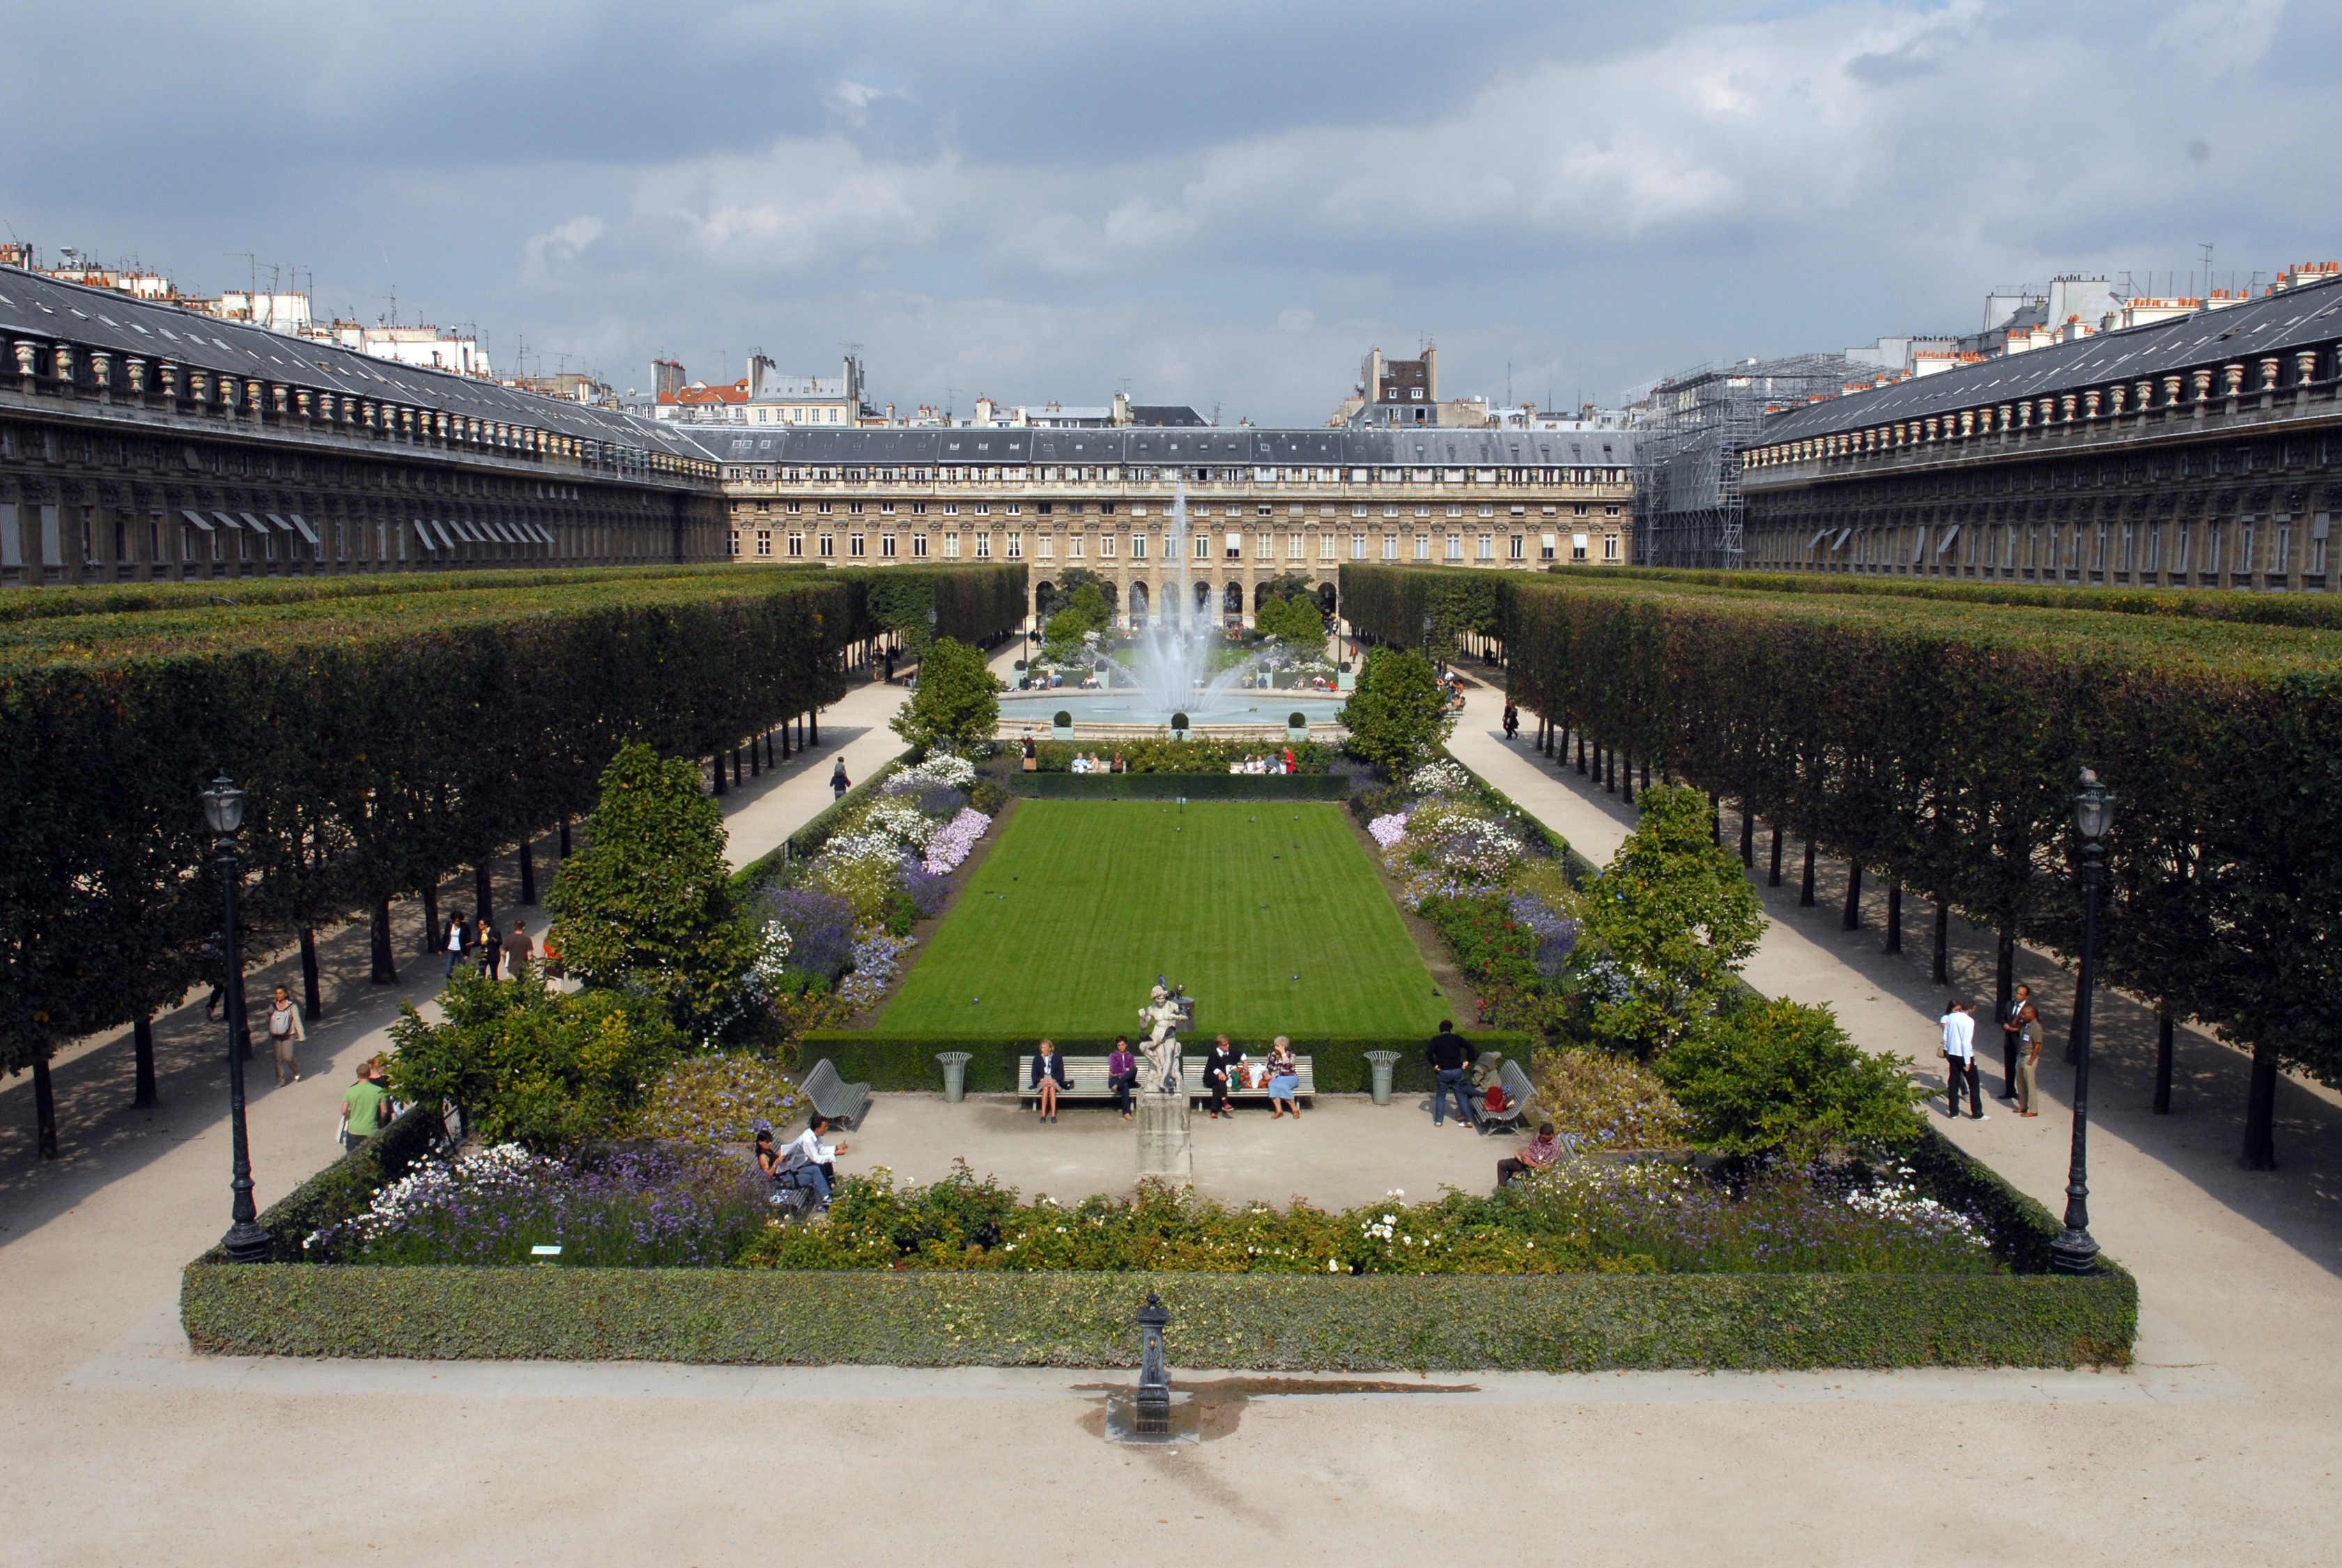 Франция пала. Пале-рояль в Париже. Пале рояль Париж галерея. Сад Пале Руаяль в Париже. Дворец кардинала Ришелье в Париже.